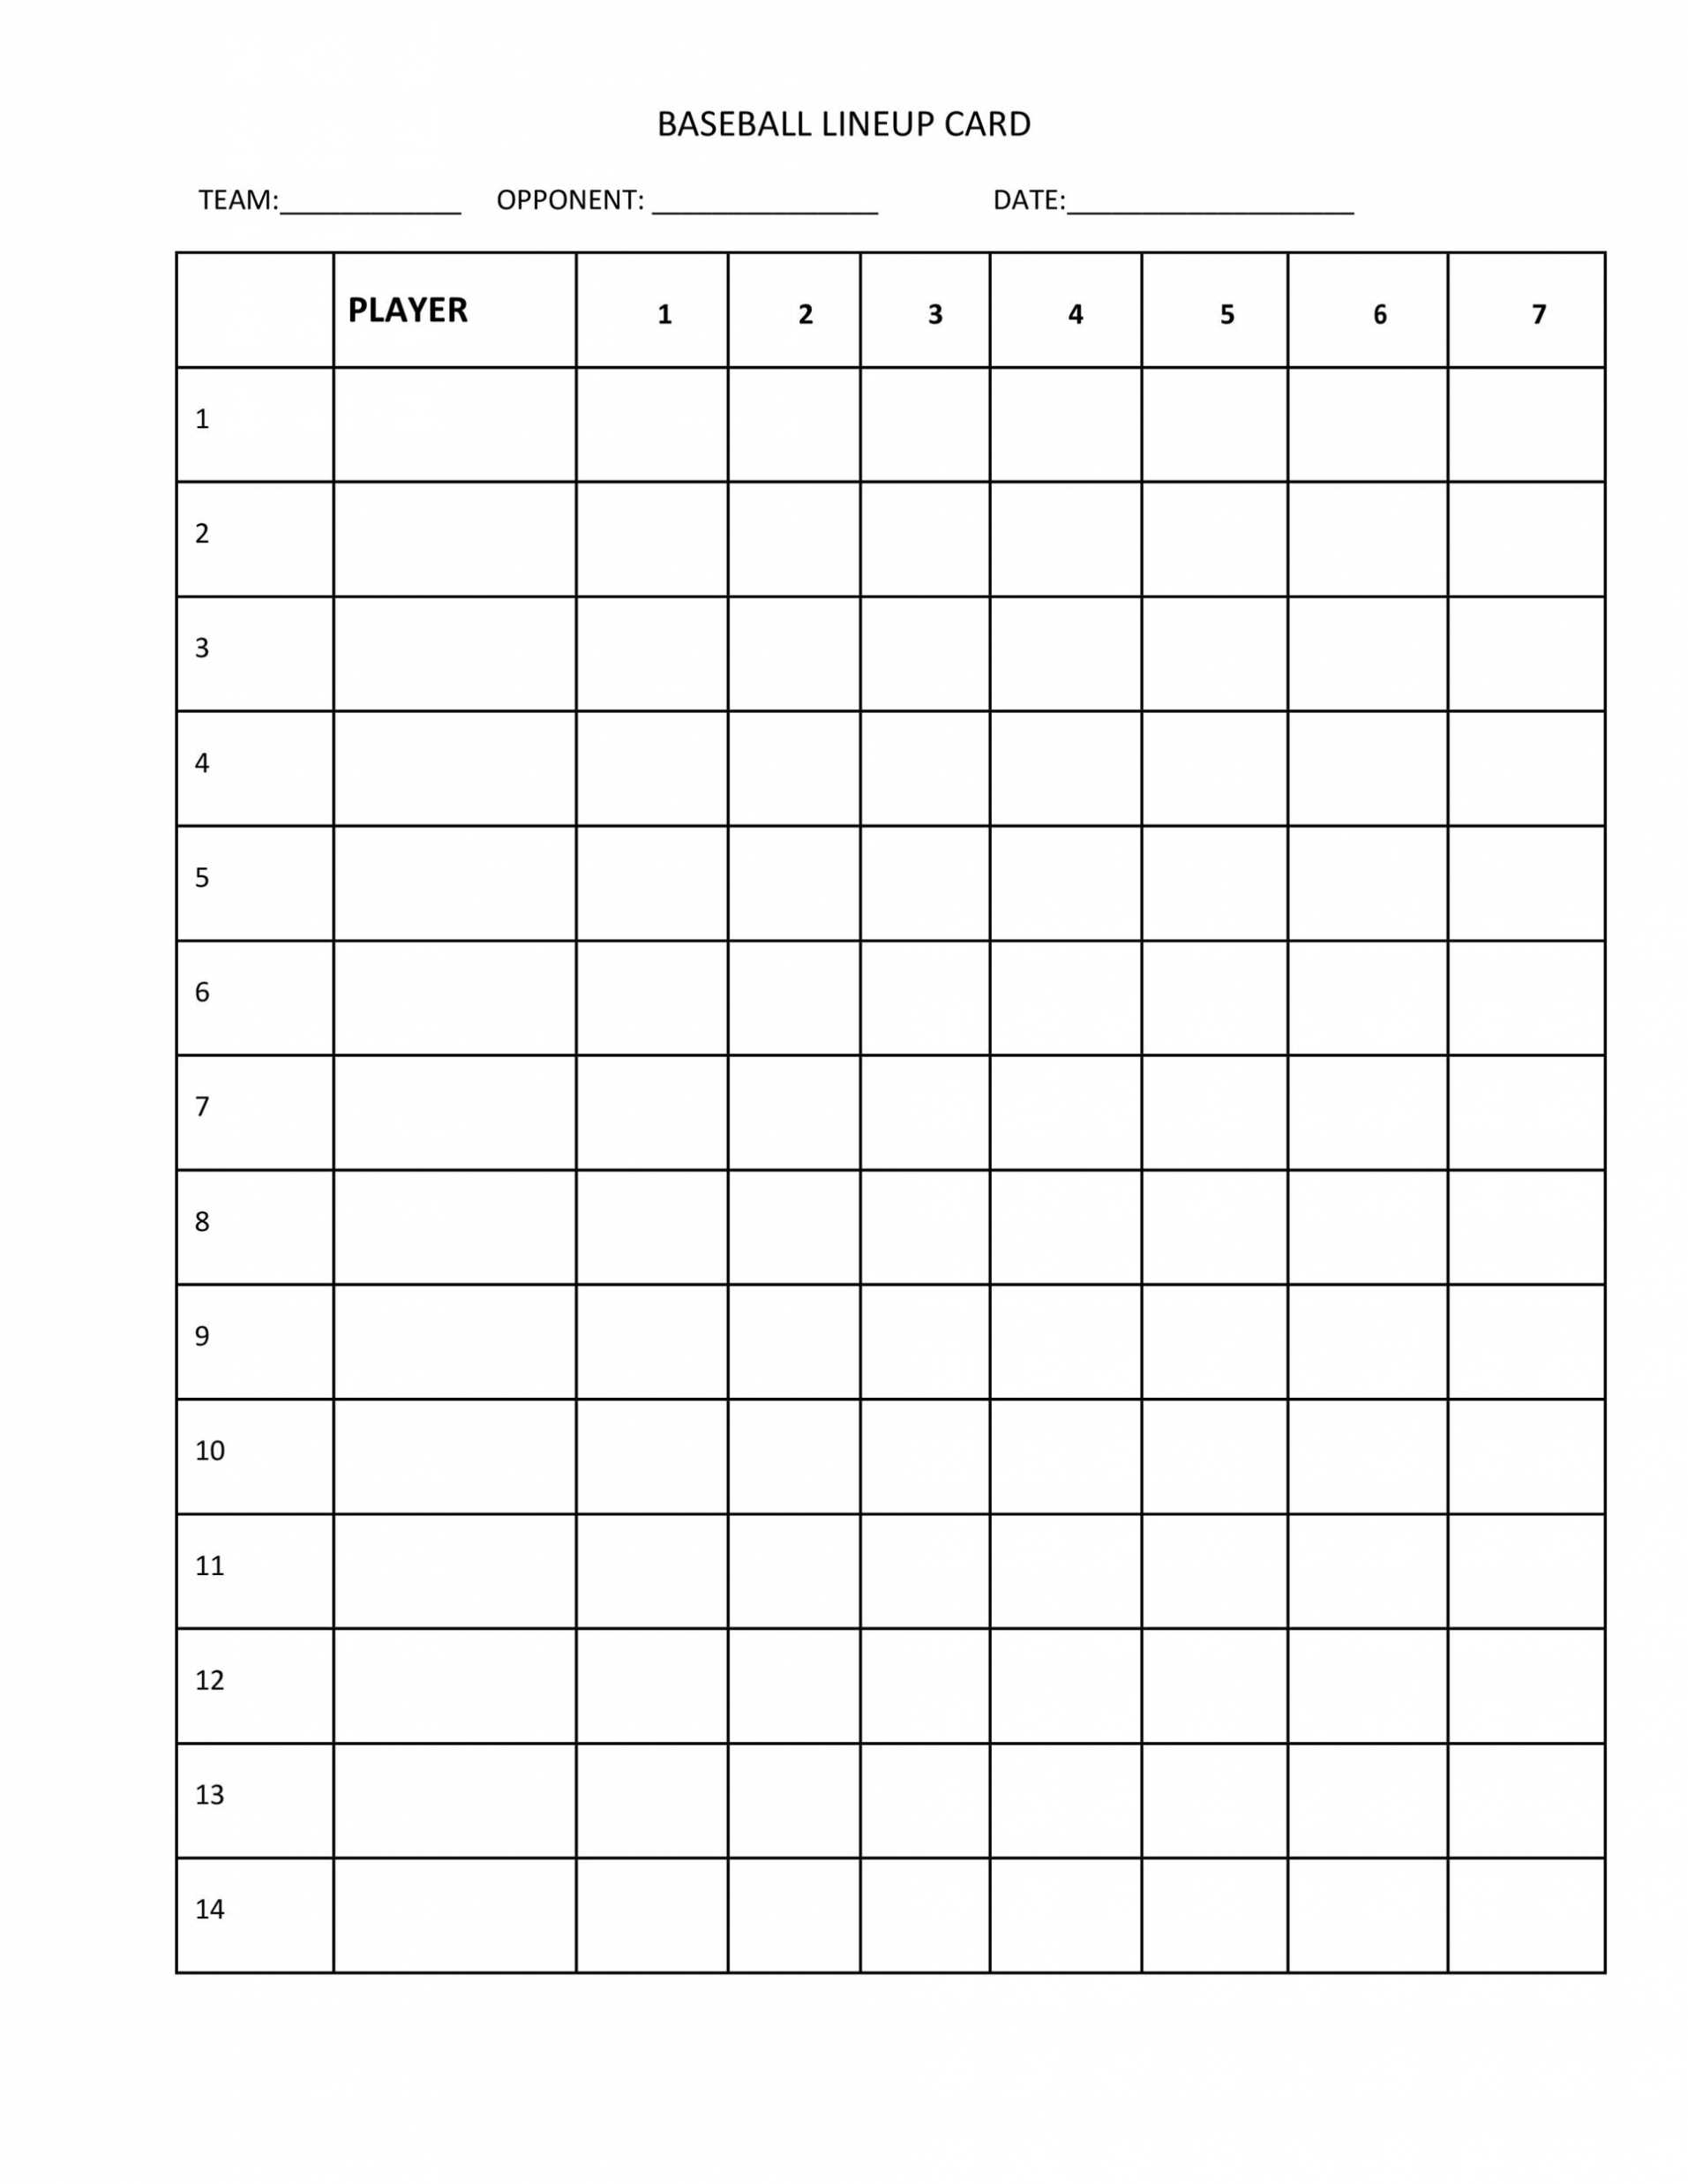 33 Printable Baseball Lineup Templates [Free Download] ᐅ with regard to Free Baseball Lineup Card Template